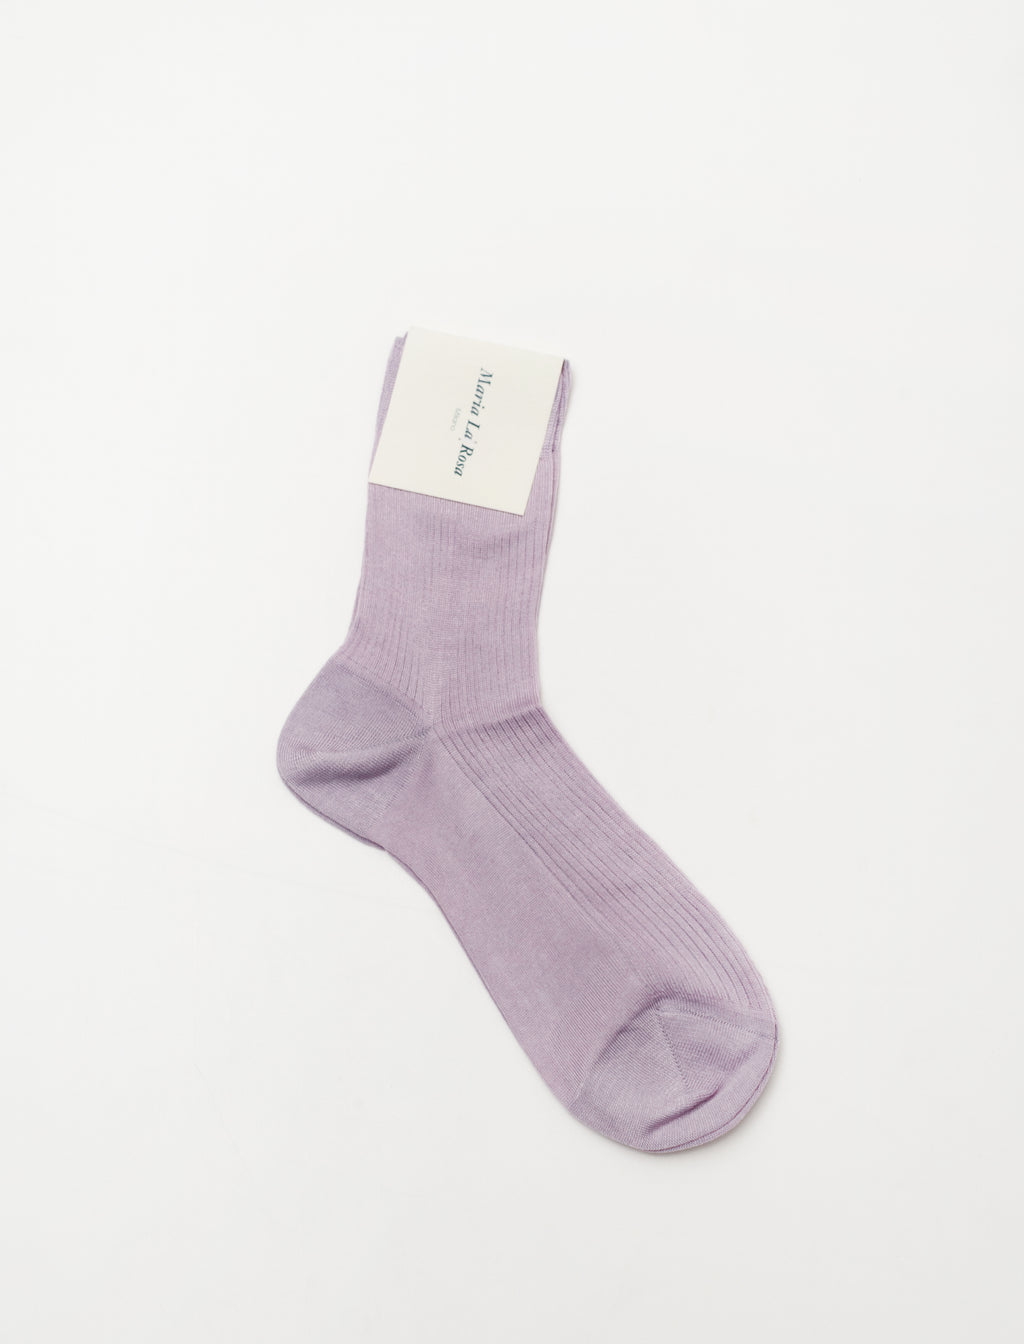 SOCKS Metallic Silk Socks - Maria La Rosa on Garmentory